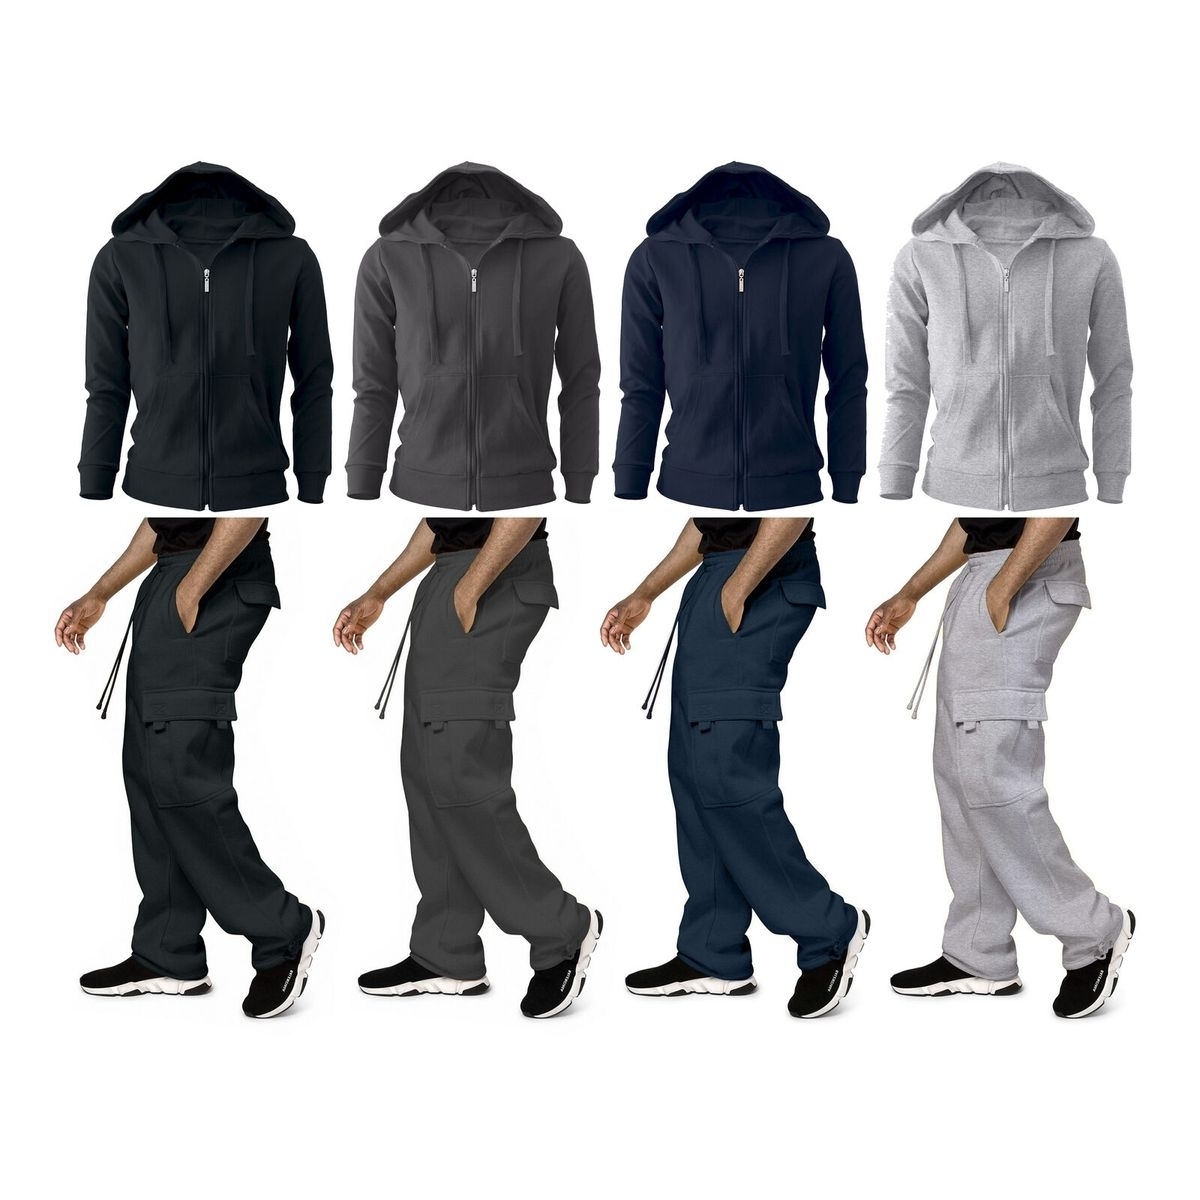 Multi-Pack: Men's Big & Tall Winter Warm Athletic Active Cozy Fleece Lined Multi-Pocket Full Zip Up Cargo Tracksuit - Grey, 1-pack, Medium